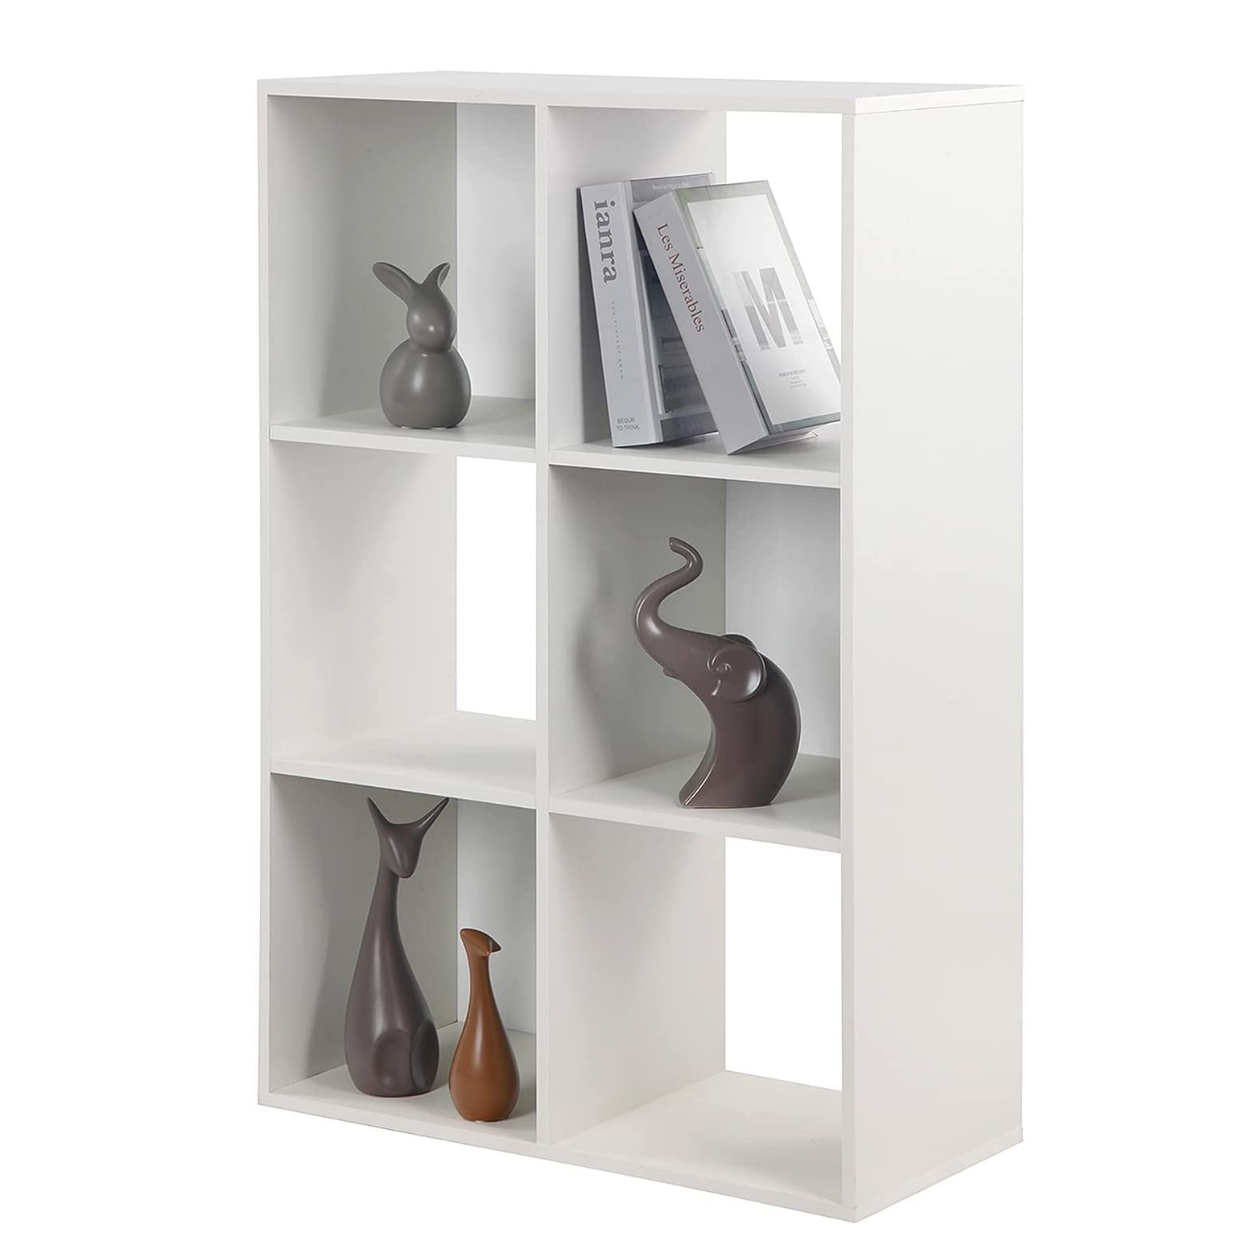 Bookshelf 6 Tier Wooden Storage Cubes, Closet Cabinet Bookcase